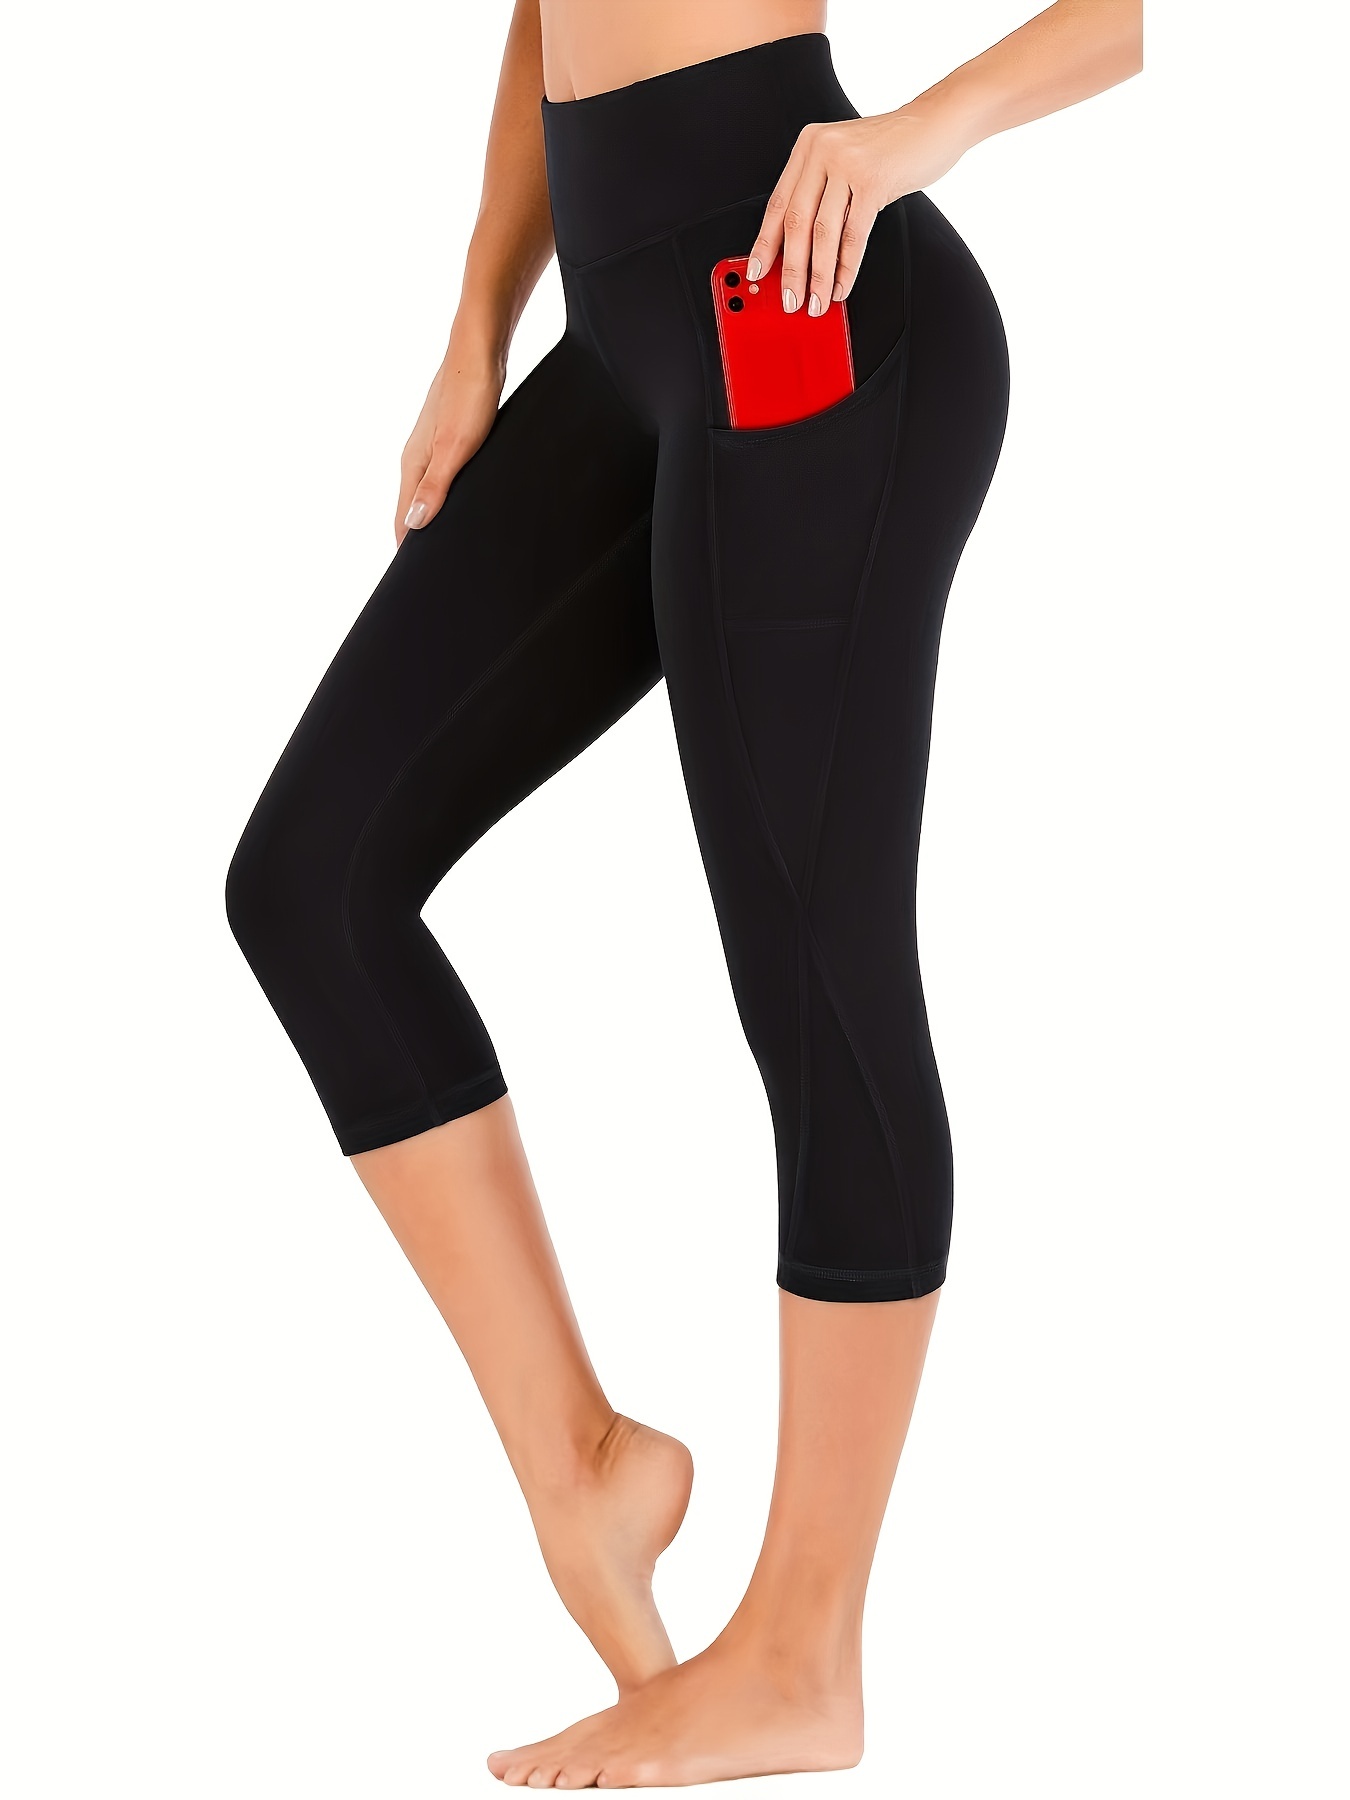 Leggings for Women with Pockets High Waist Capri Workout Running